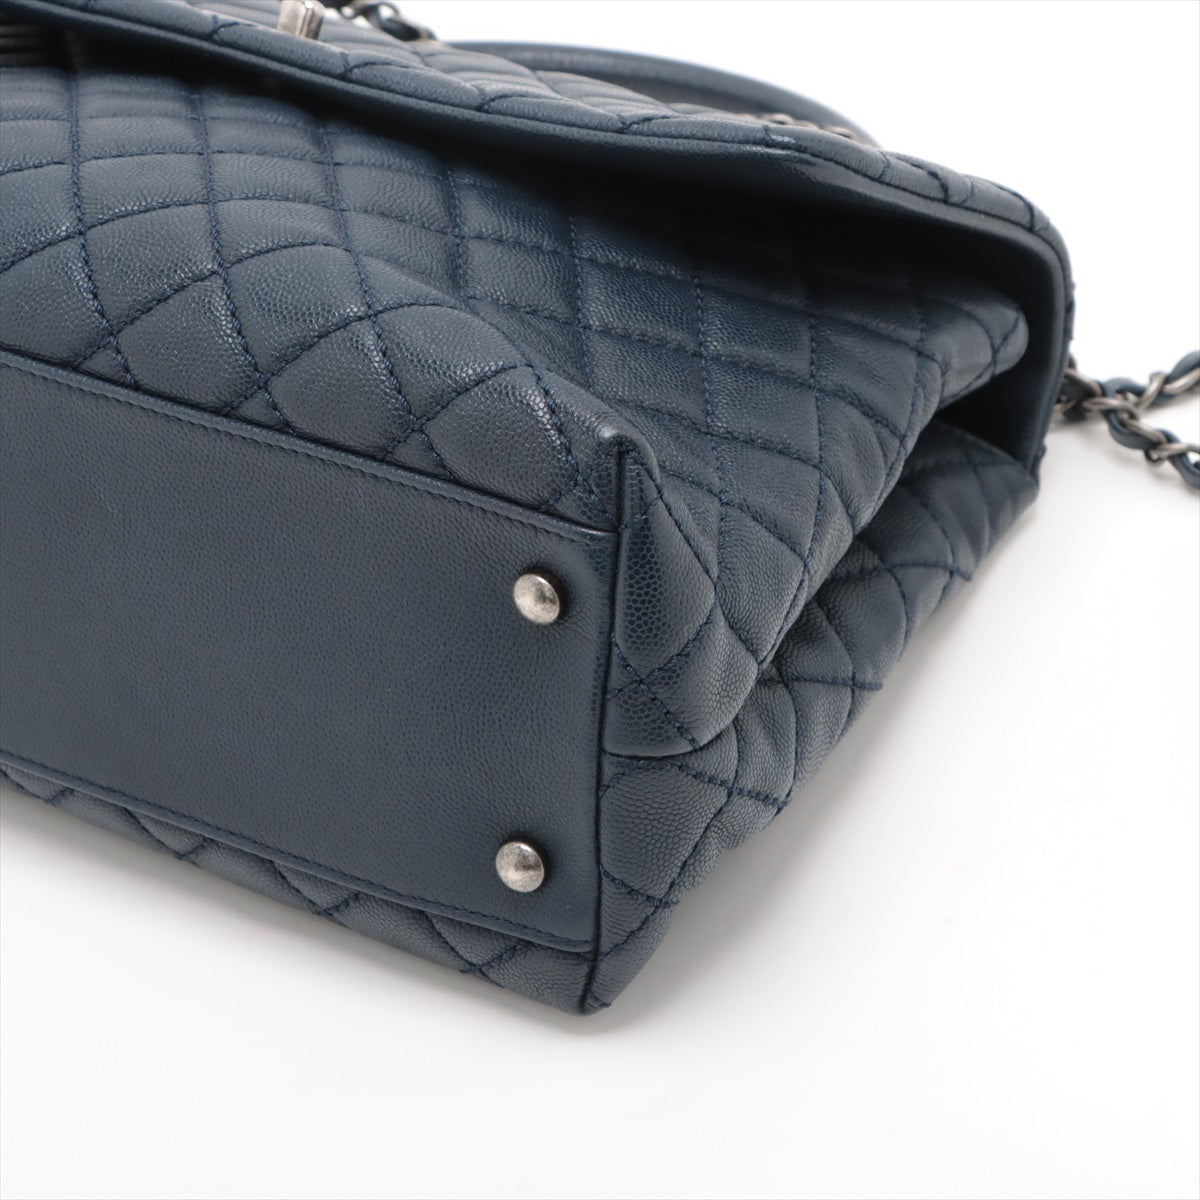 Chanel Coco Handle Caviarskin 2way shoulder bag Navy blue Black x silver hardware 22XXXXXX